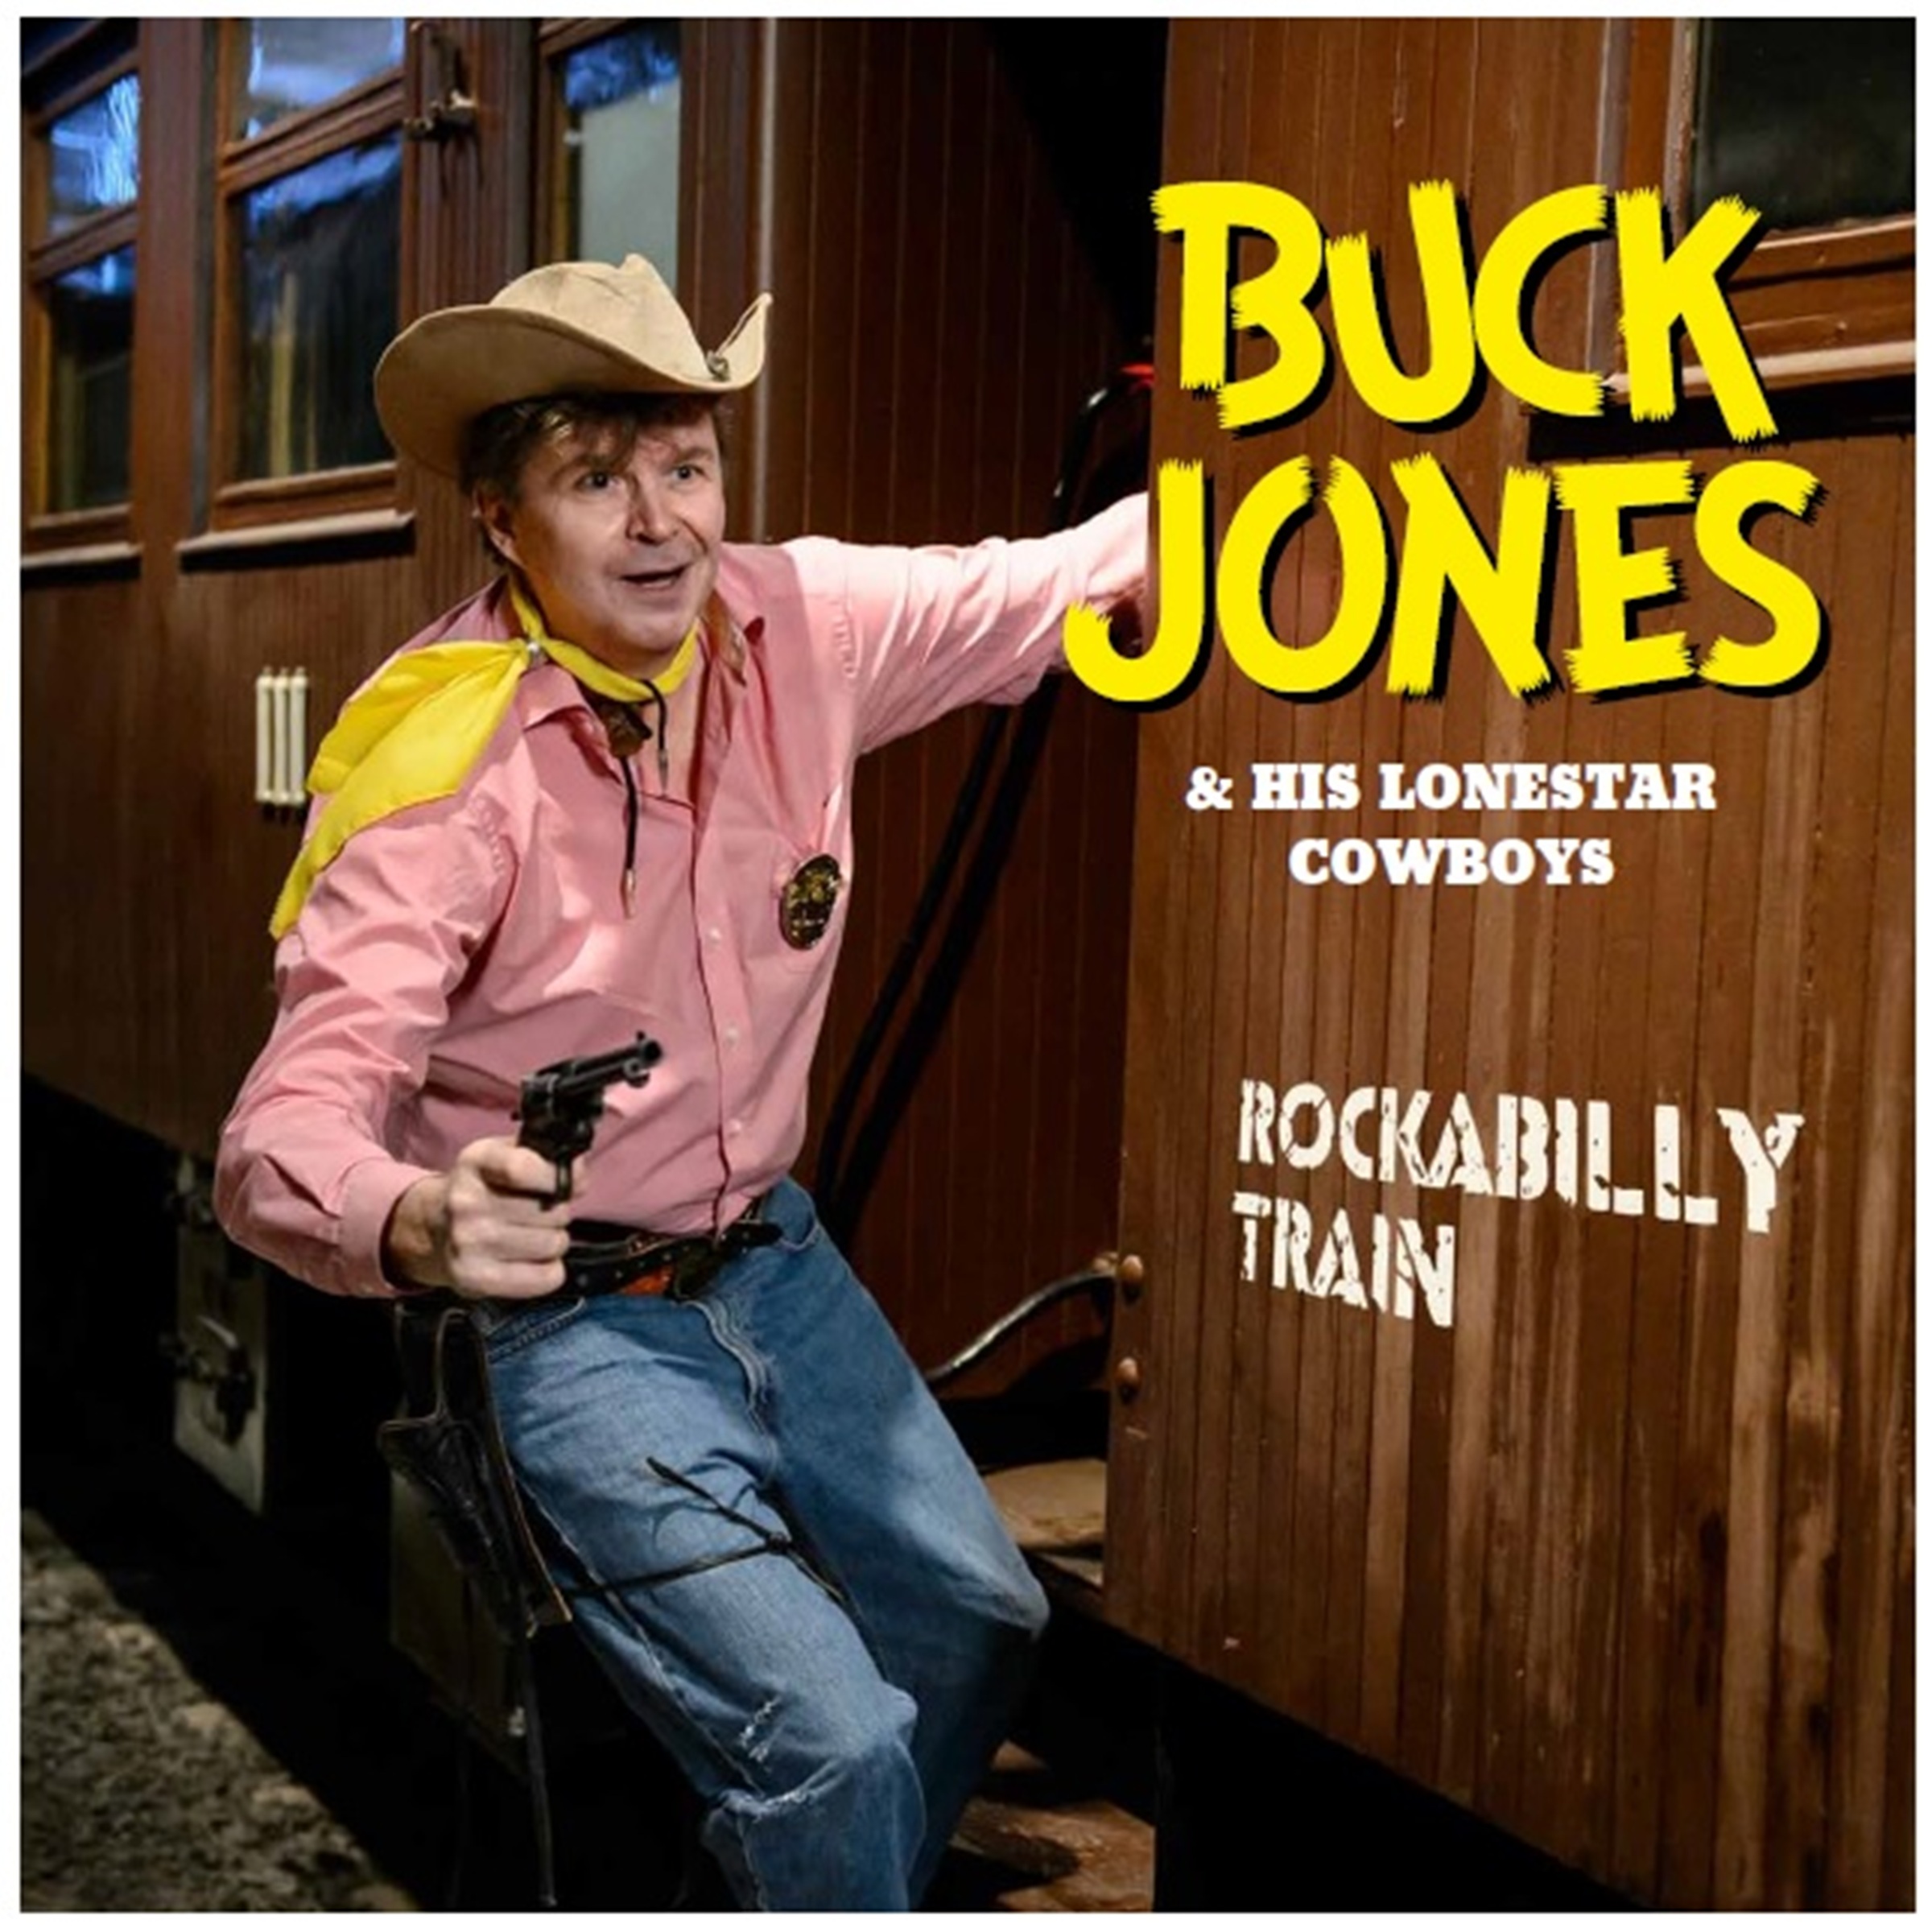 Buck Jones & His Lonestar Cowboys - Rockabilly Train - CD